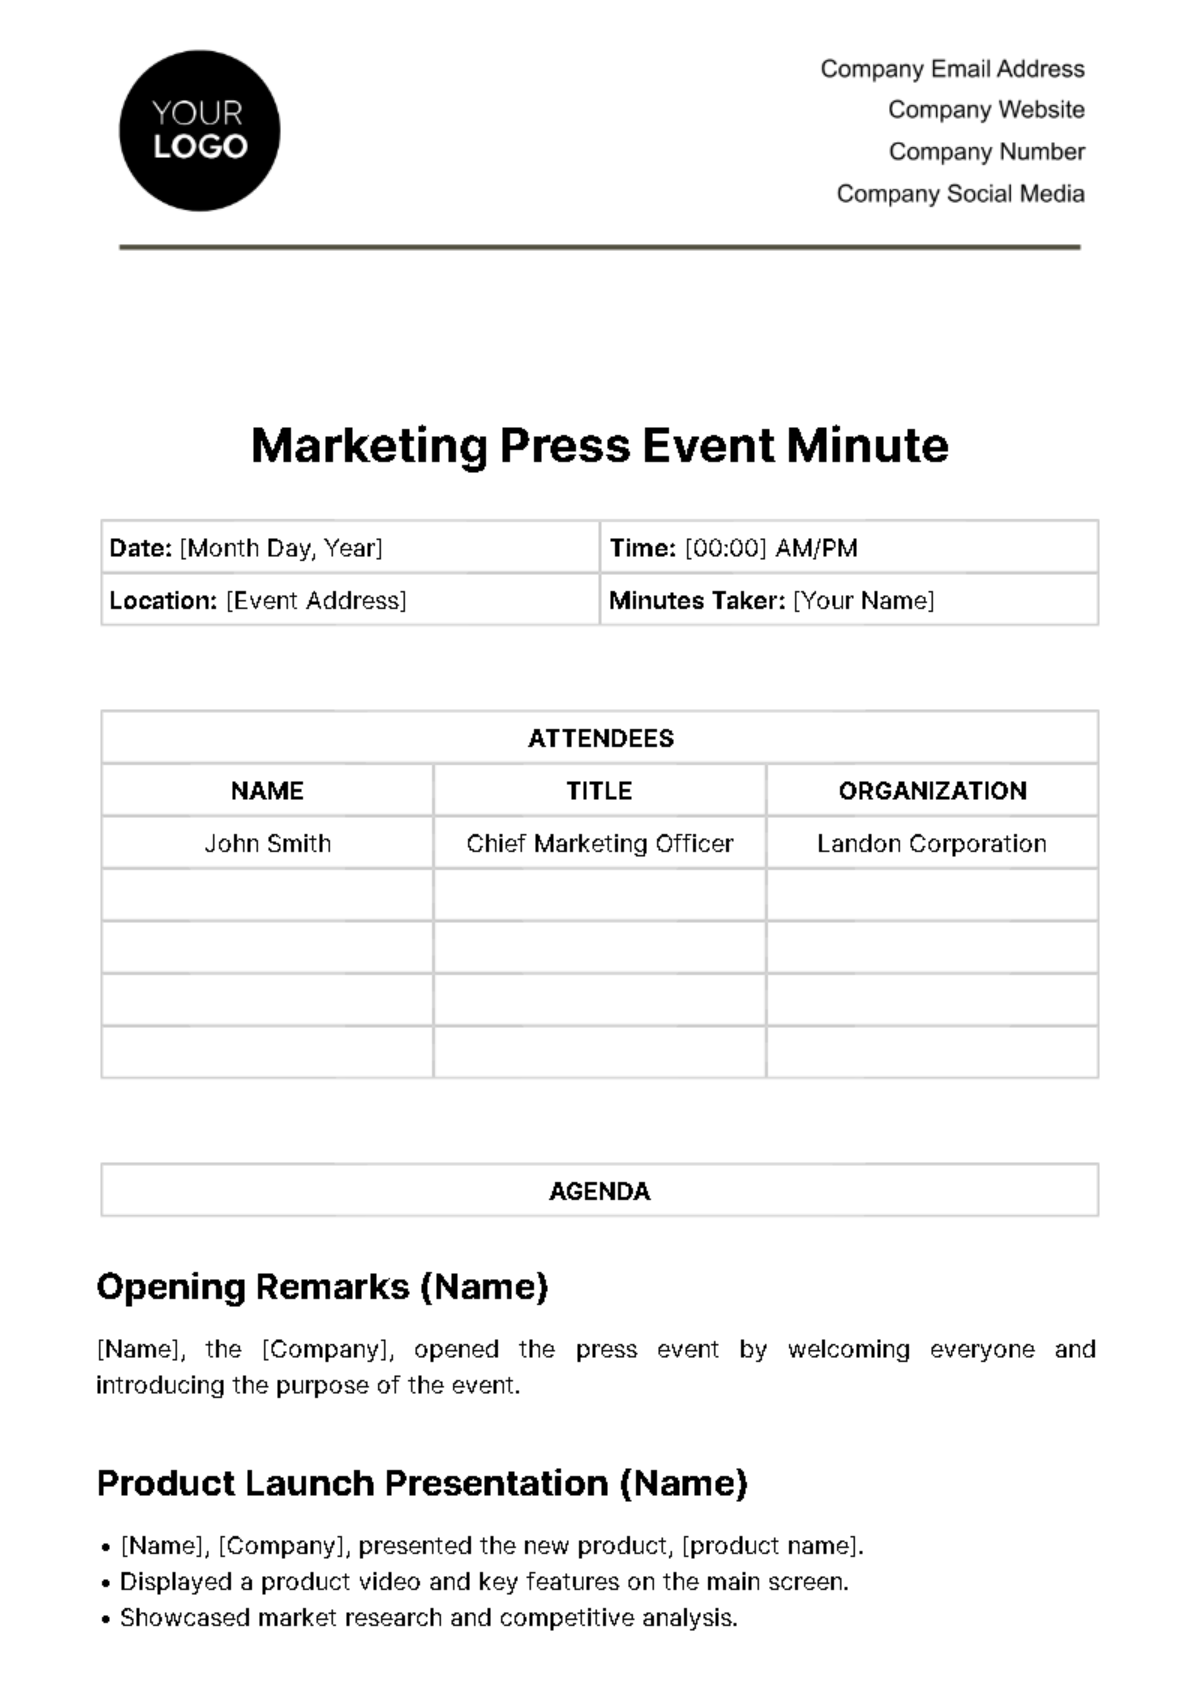 Free Marketing Press Event Minute Template